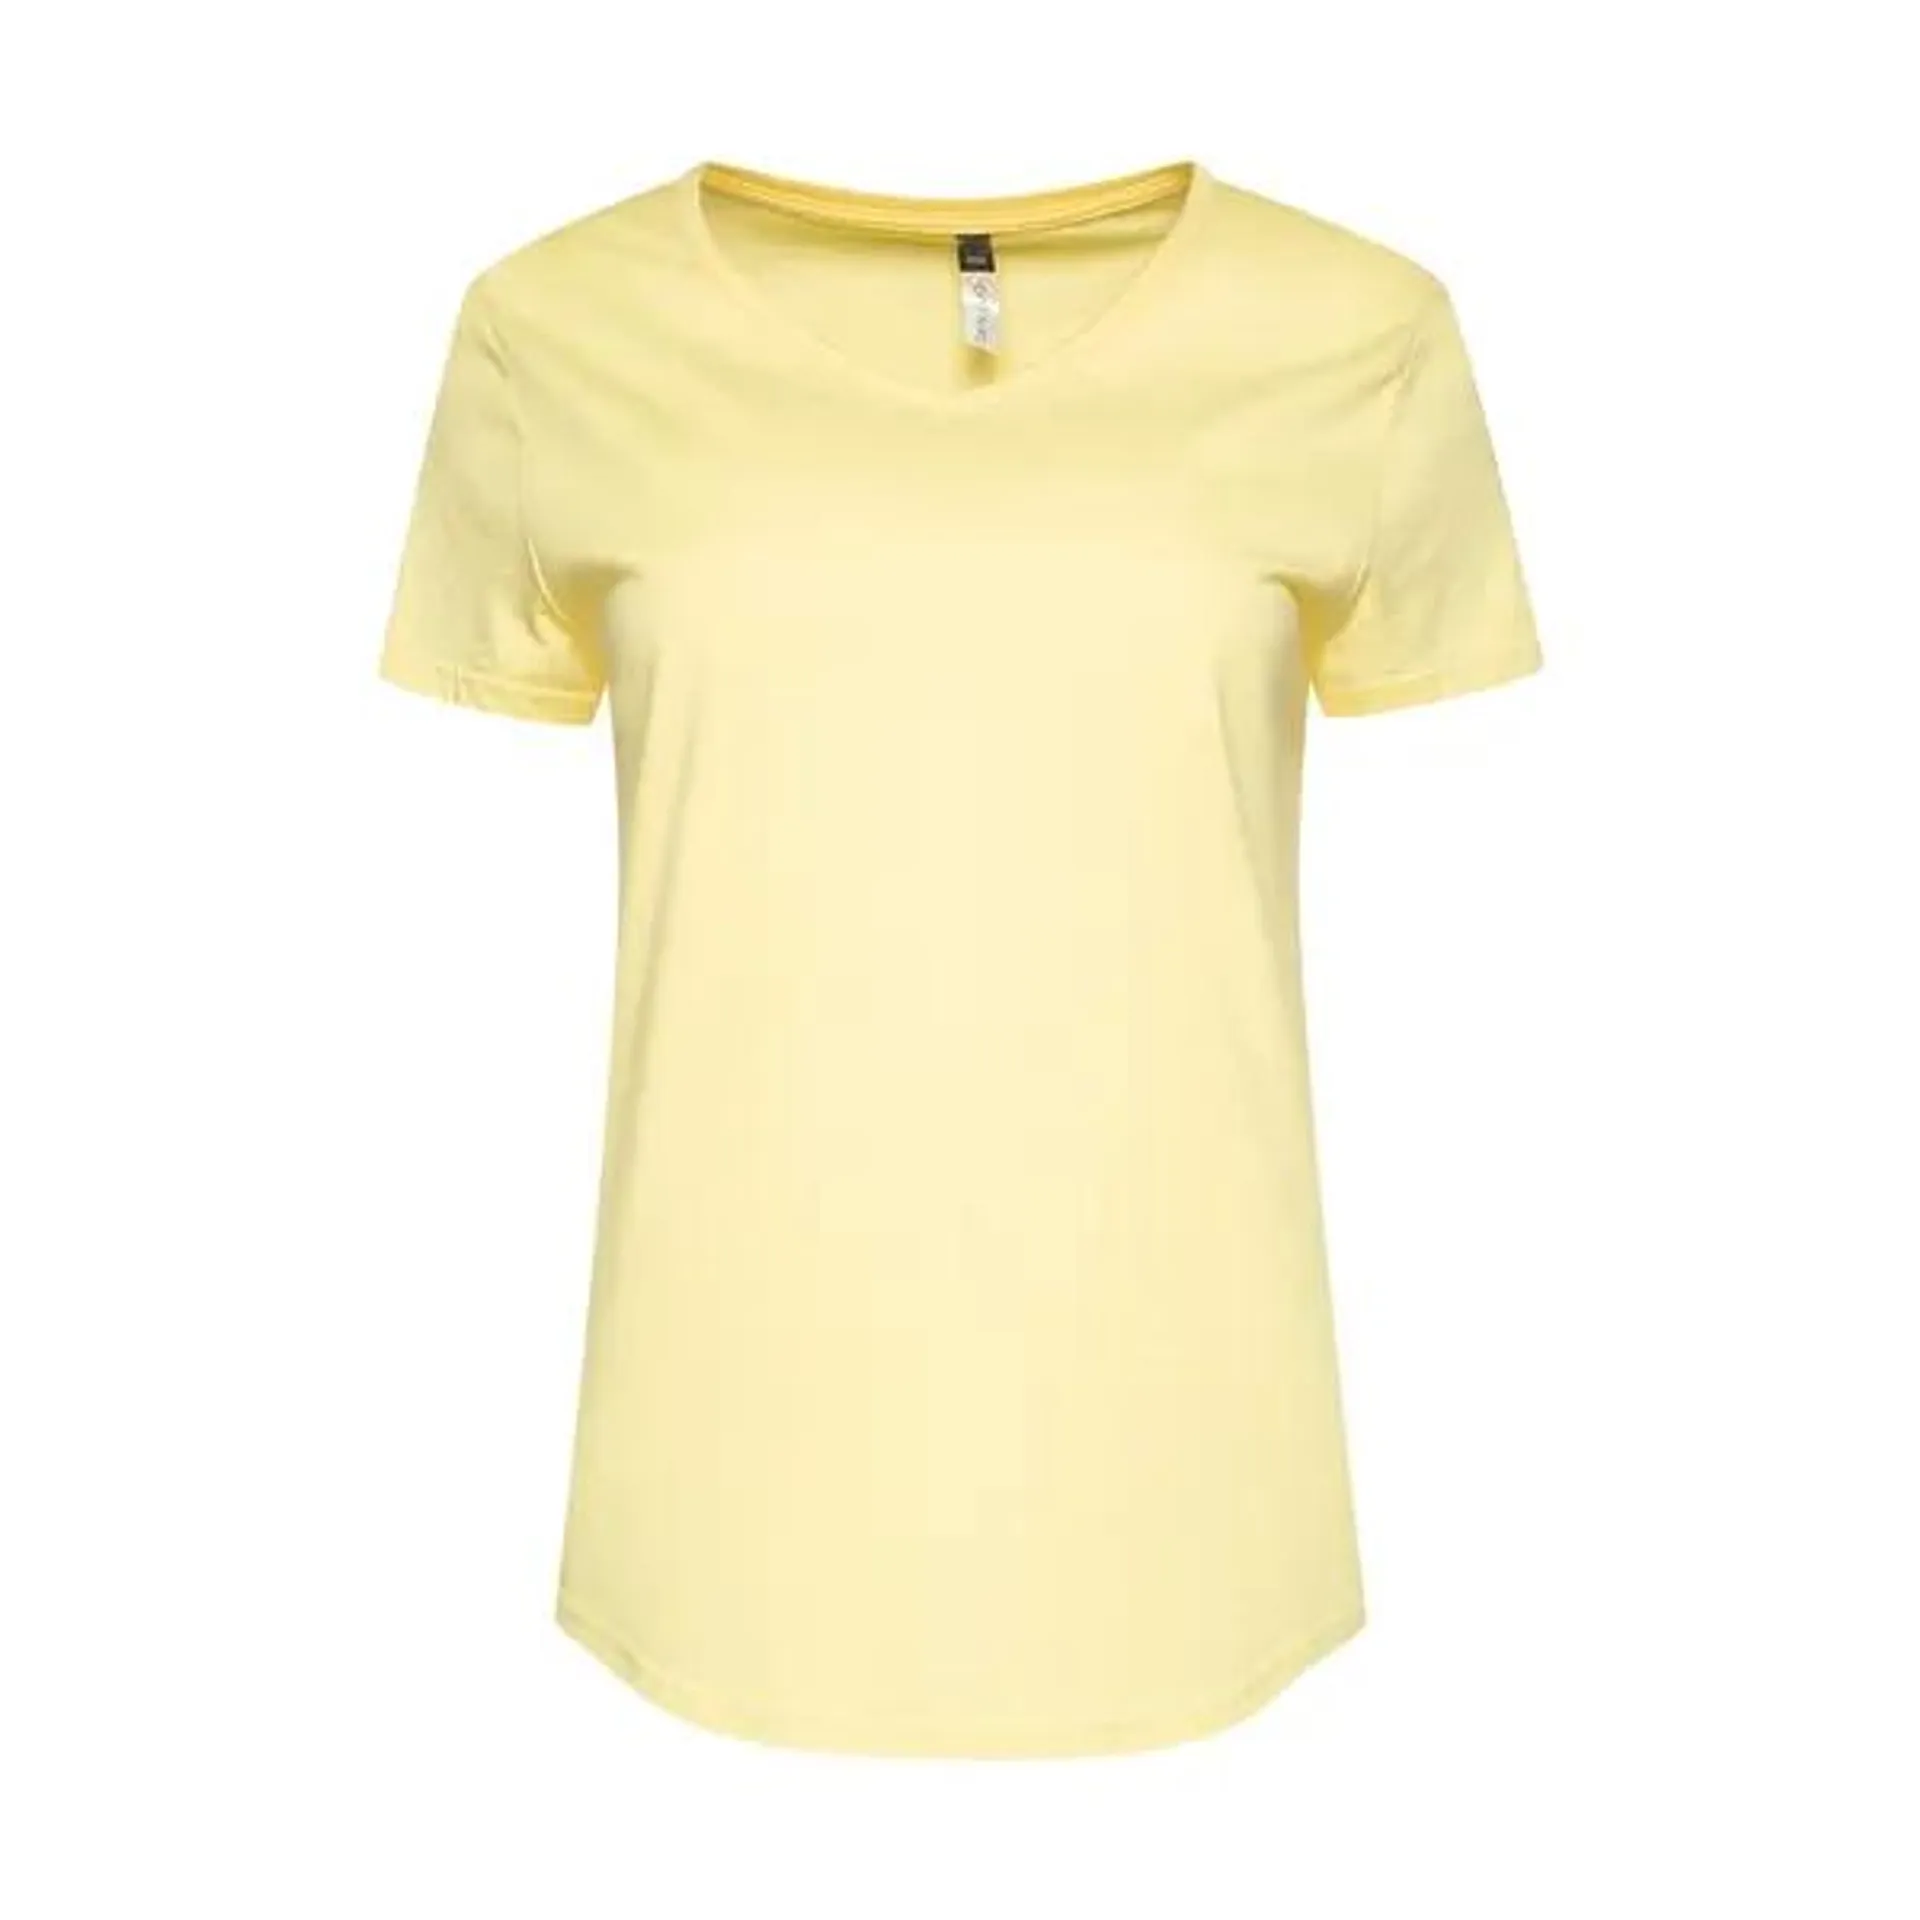 V-neck t-shirt yellow